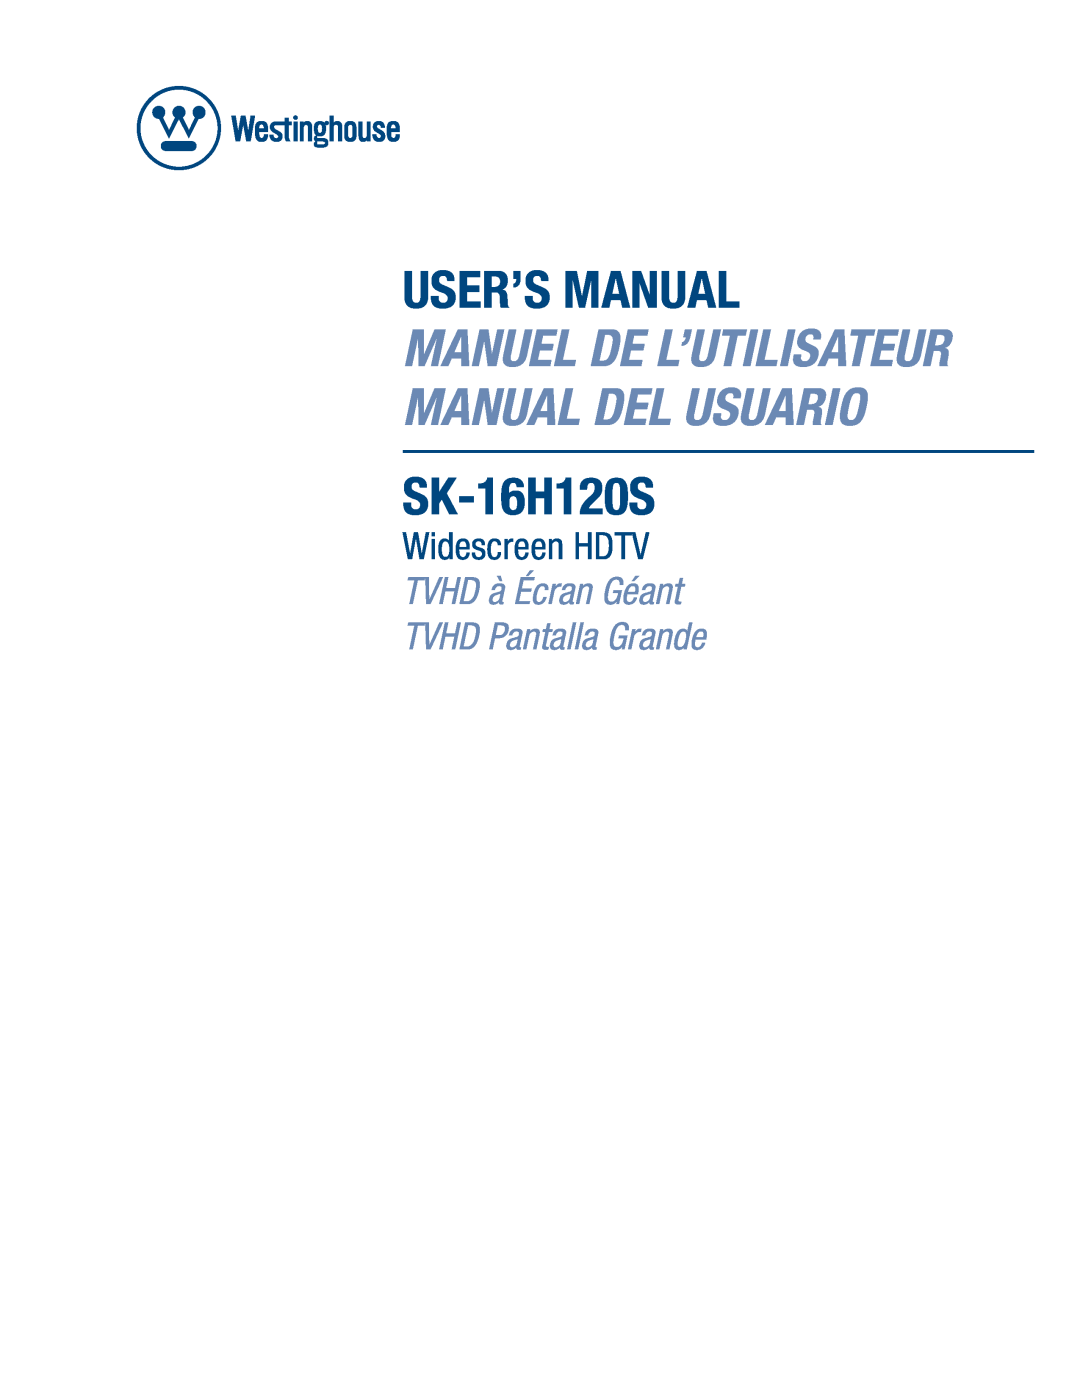 Westinghouse SK-16H120S user manual Manuel De L’Utilisateur Manual Del Usuario, Widescreen HDTV 